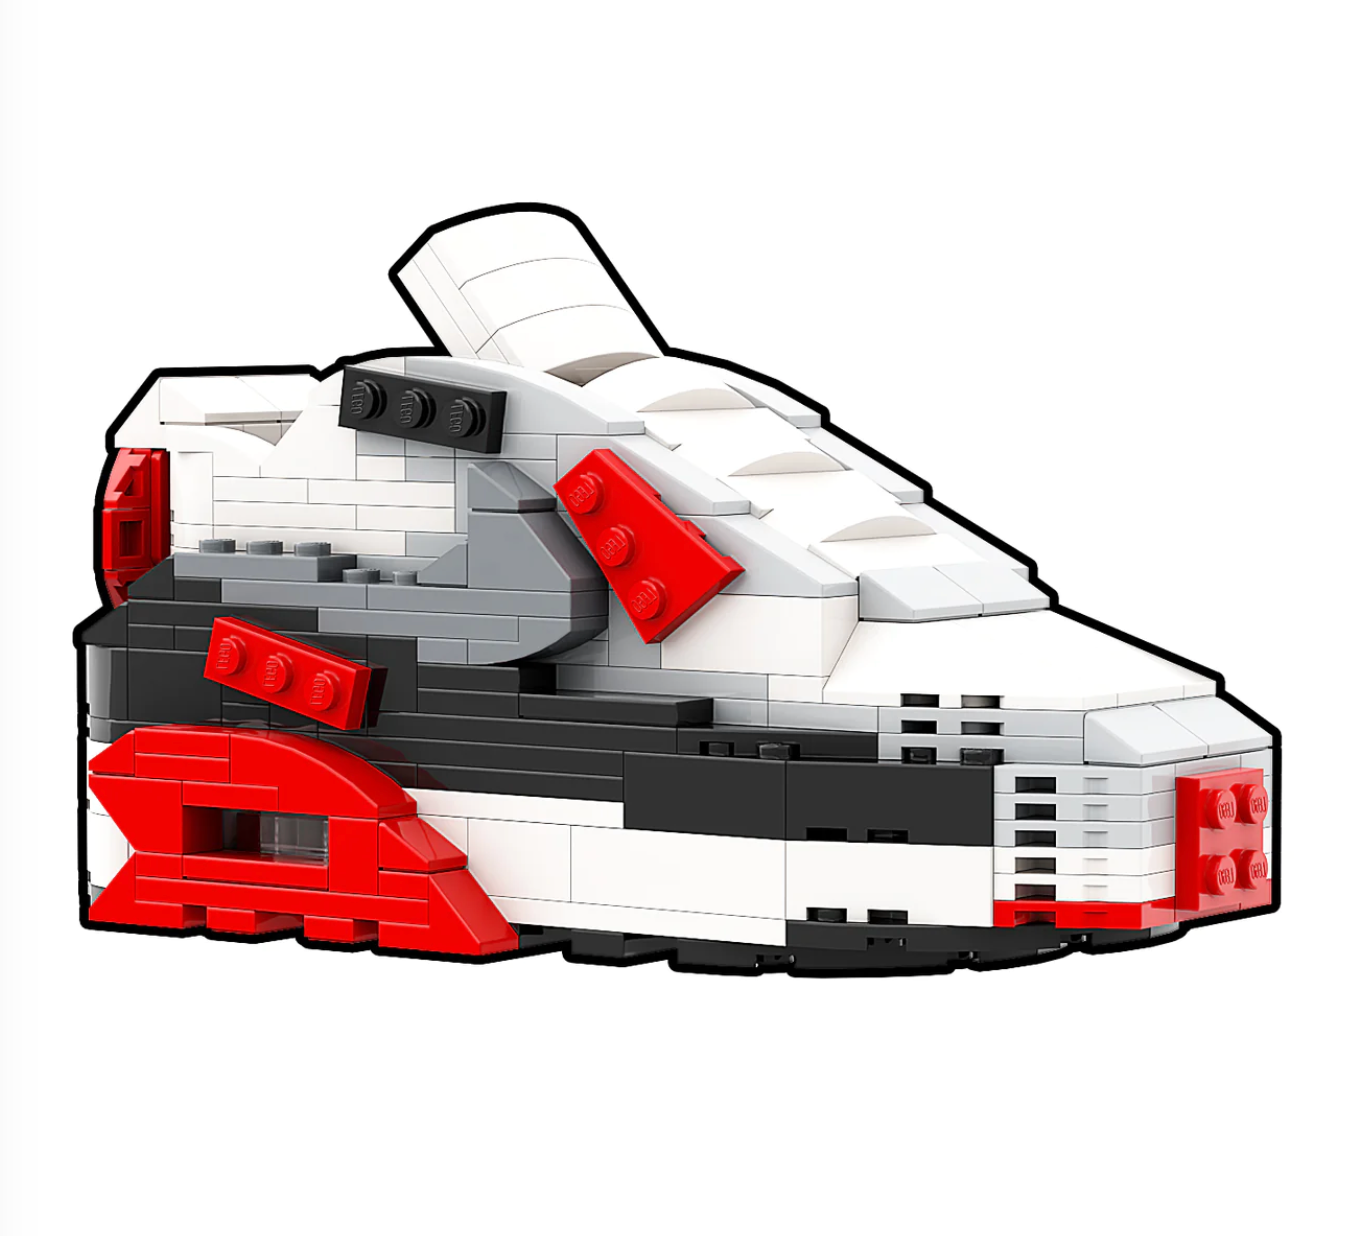 Sneaker Bricks Air Max 90 Infrared Mini Figure